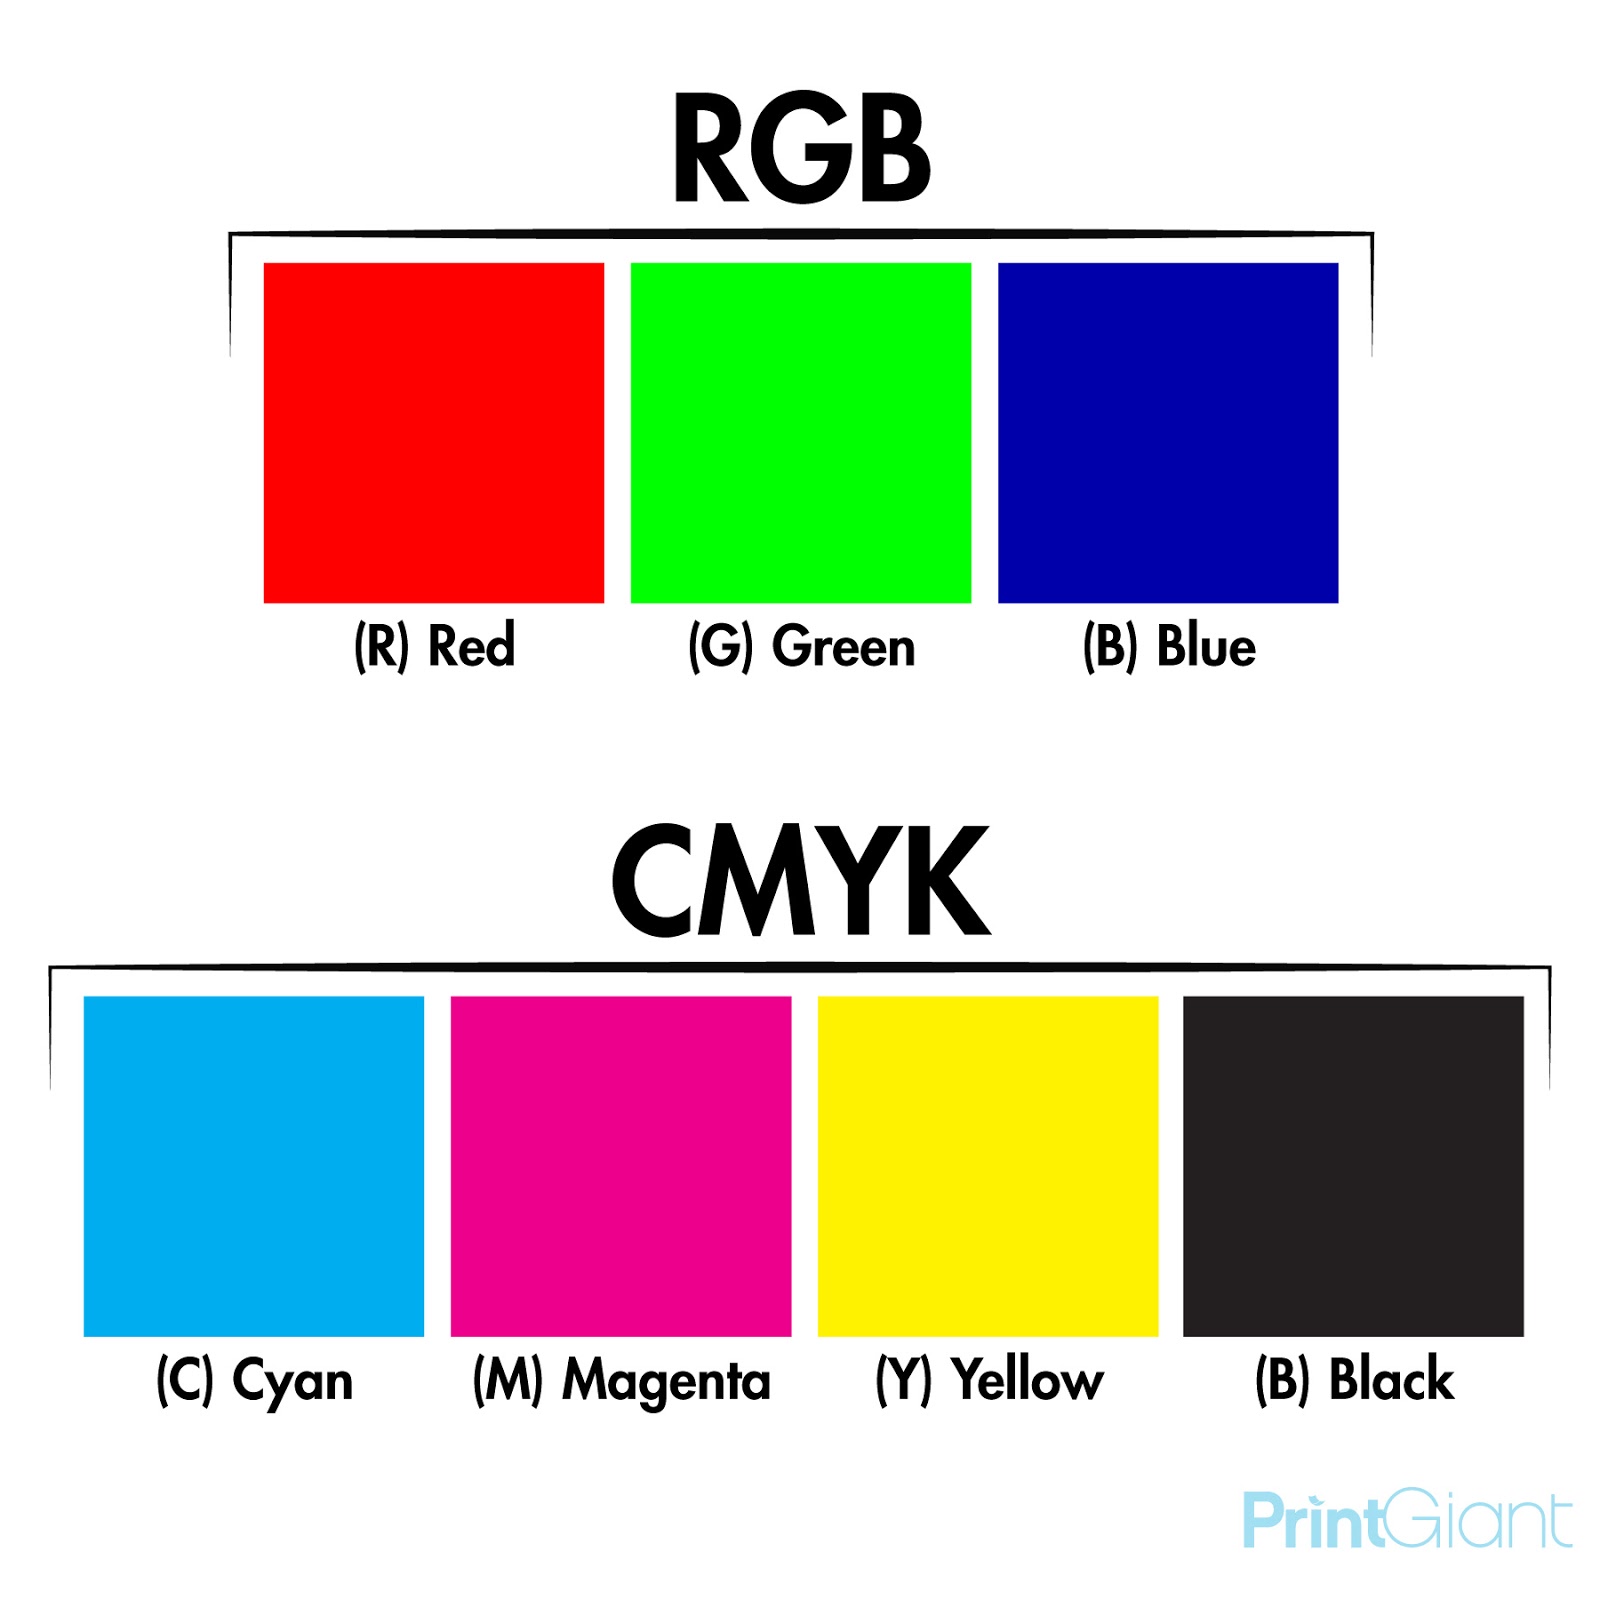 PrintGiant Info: RGB vs. CMYK